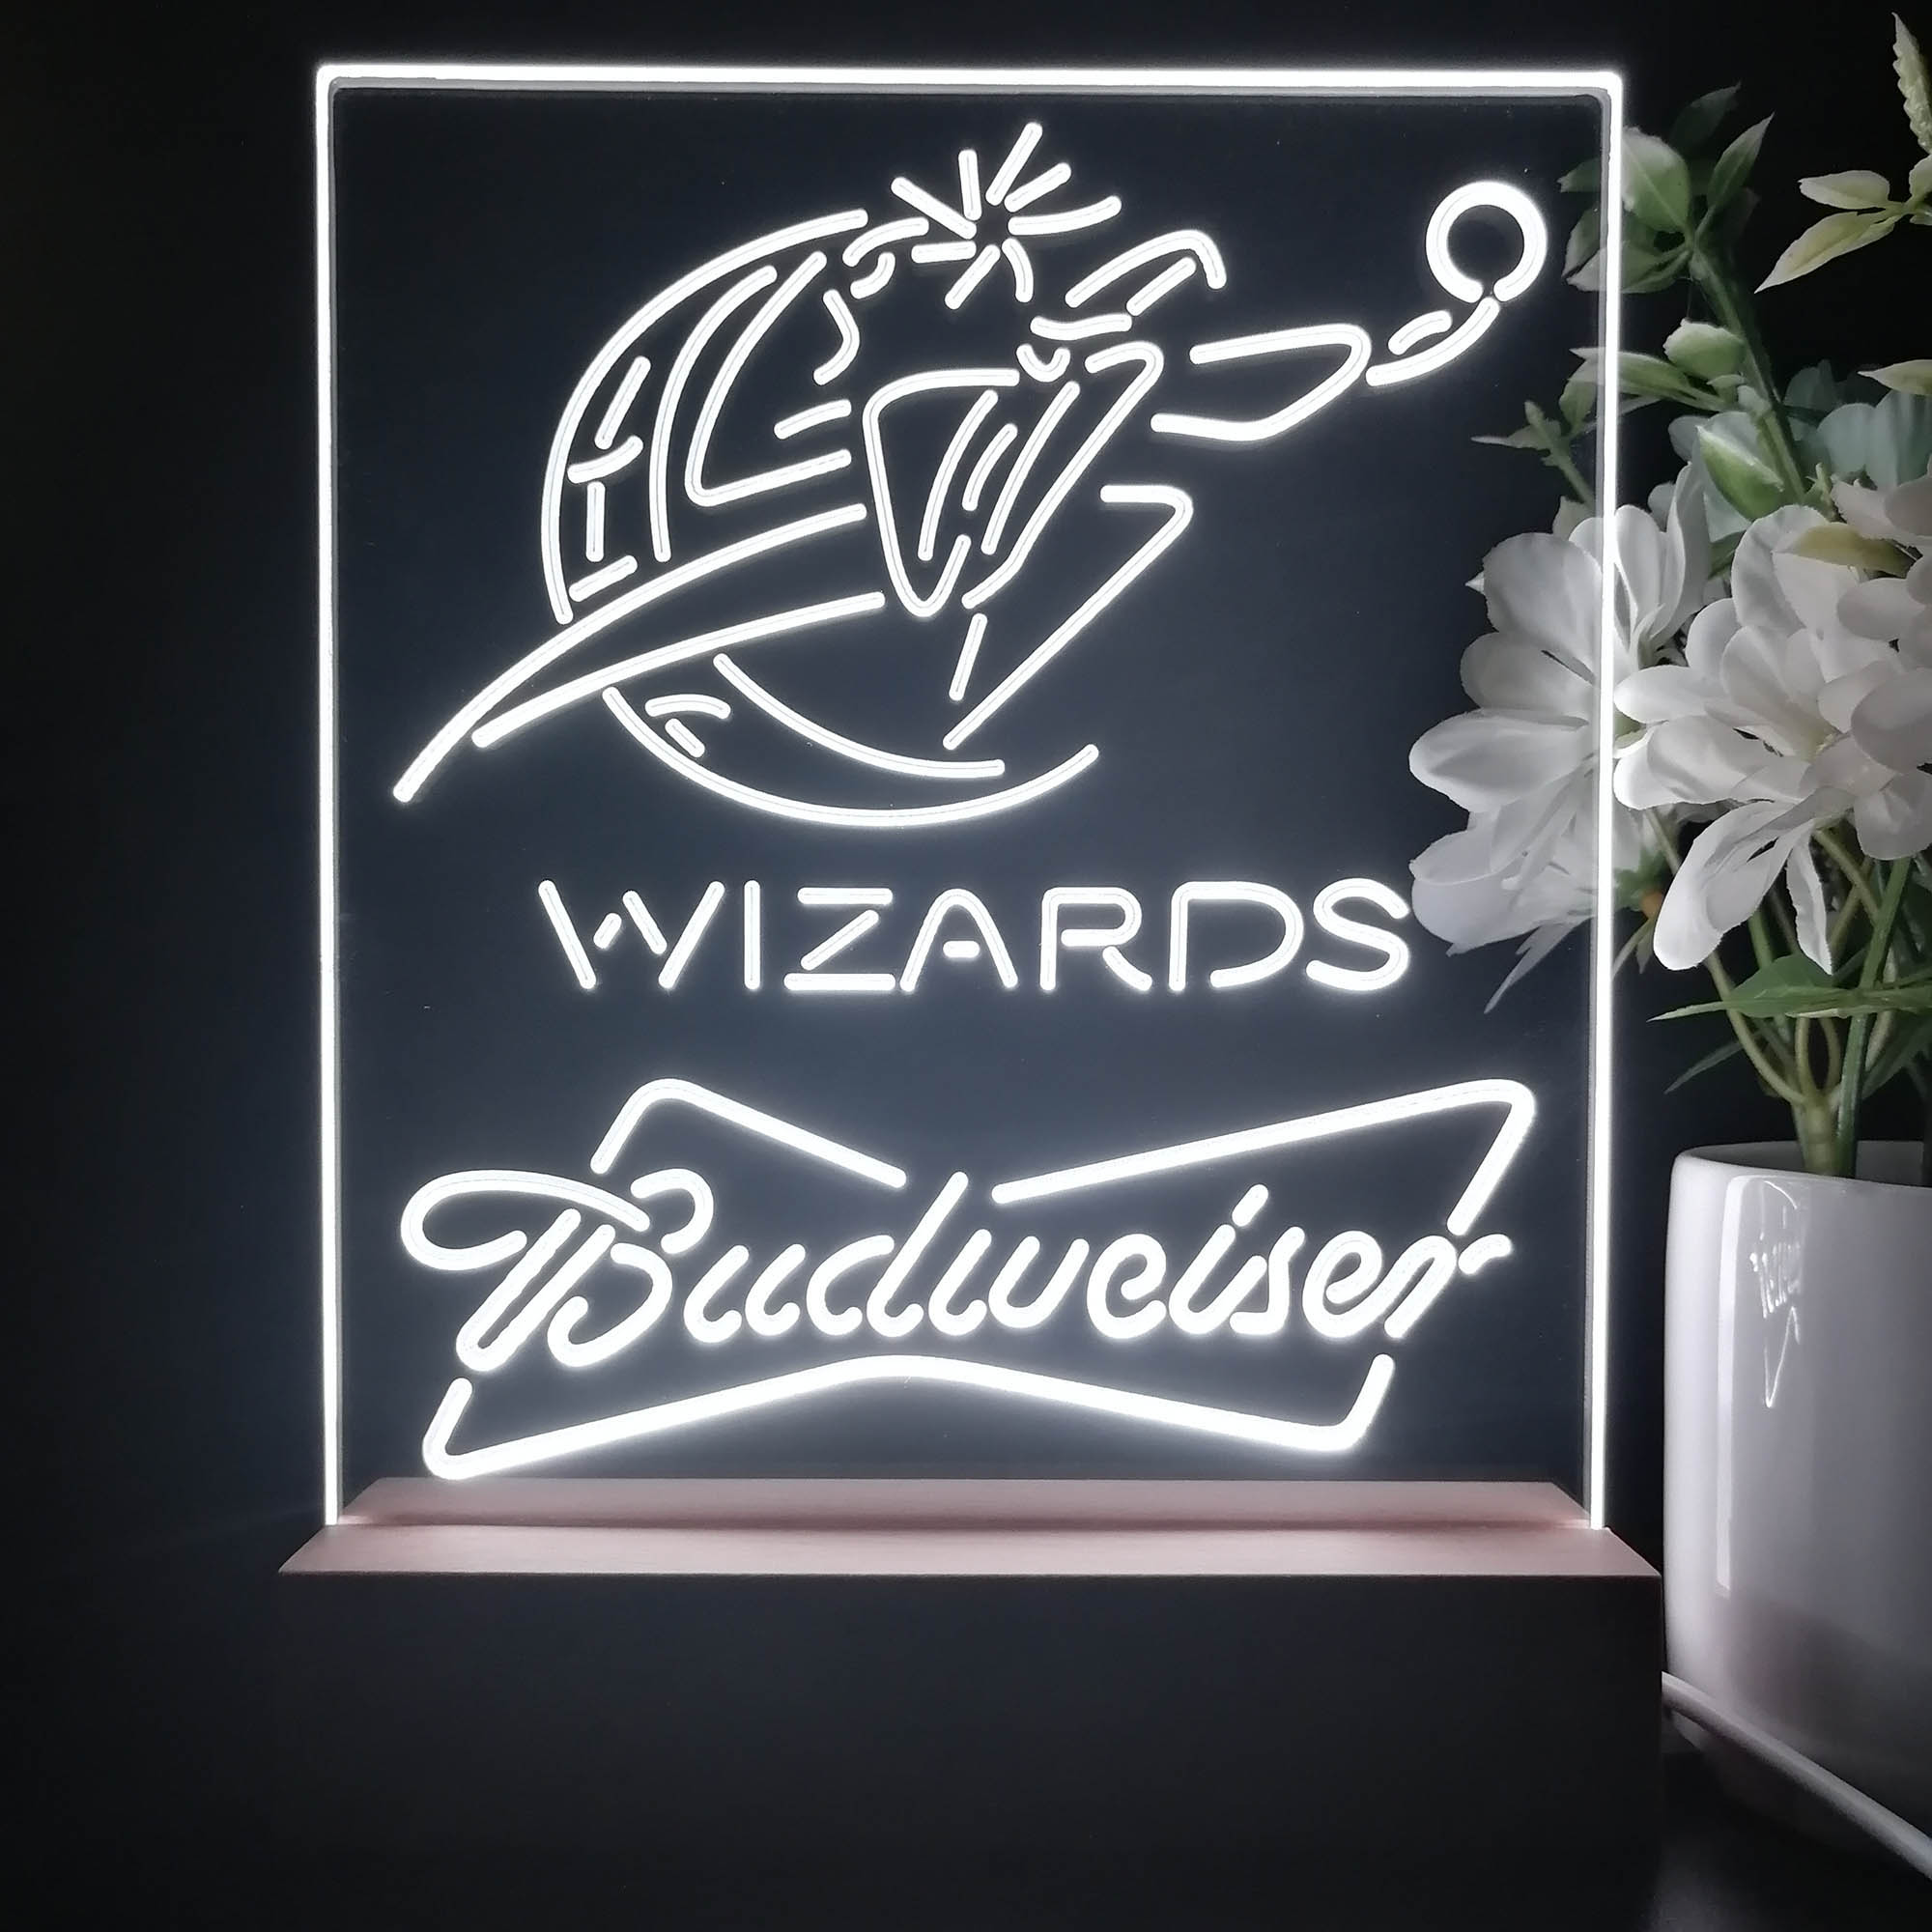 Washington Wizards Budweiser Neon Sign Pub Bar Lamp